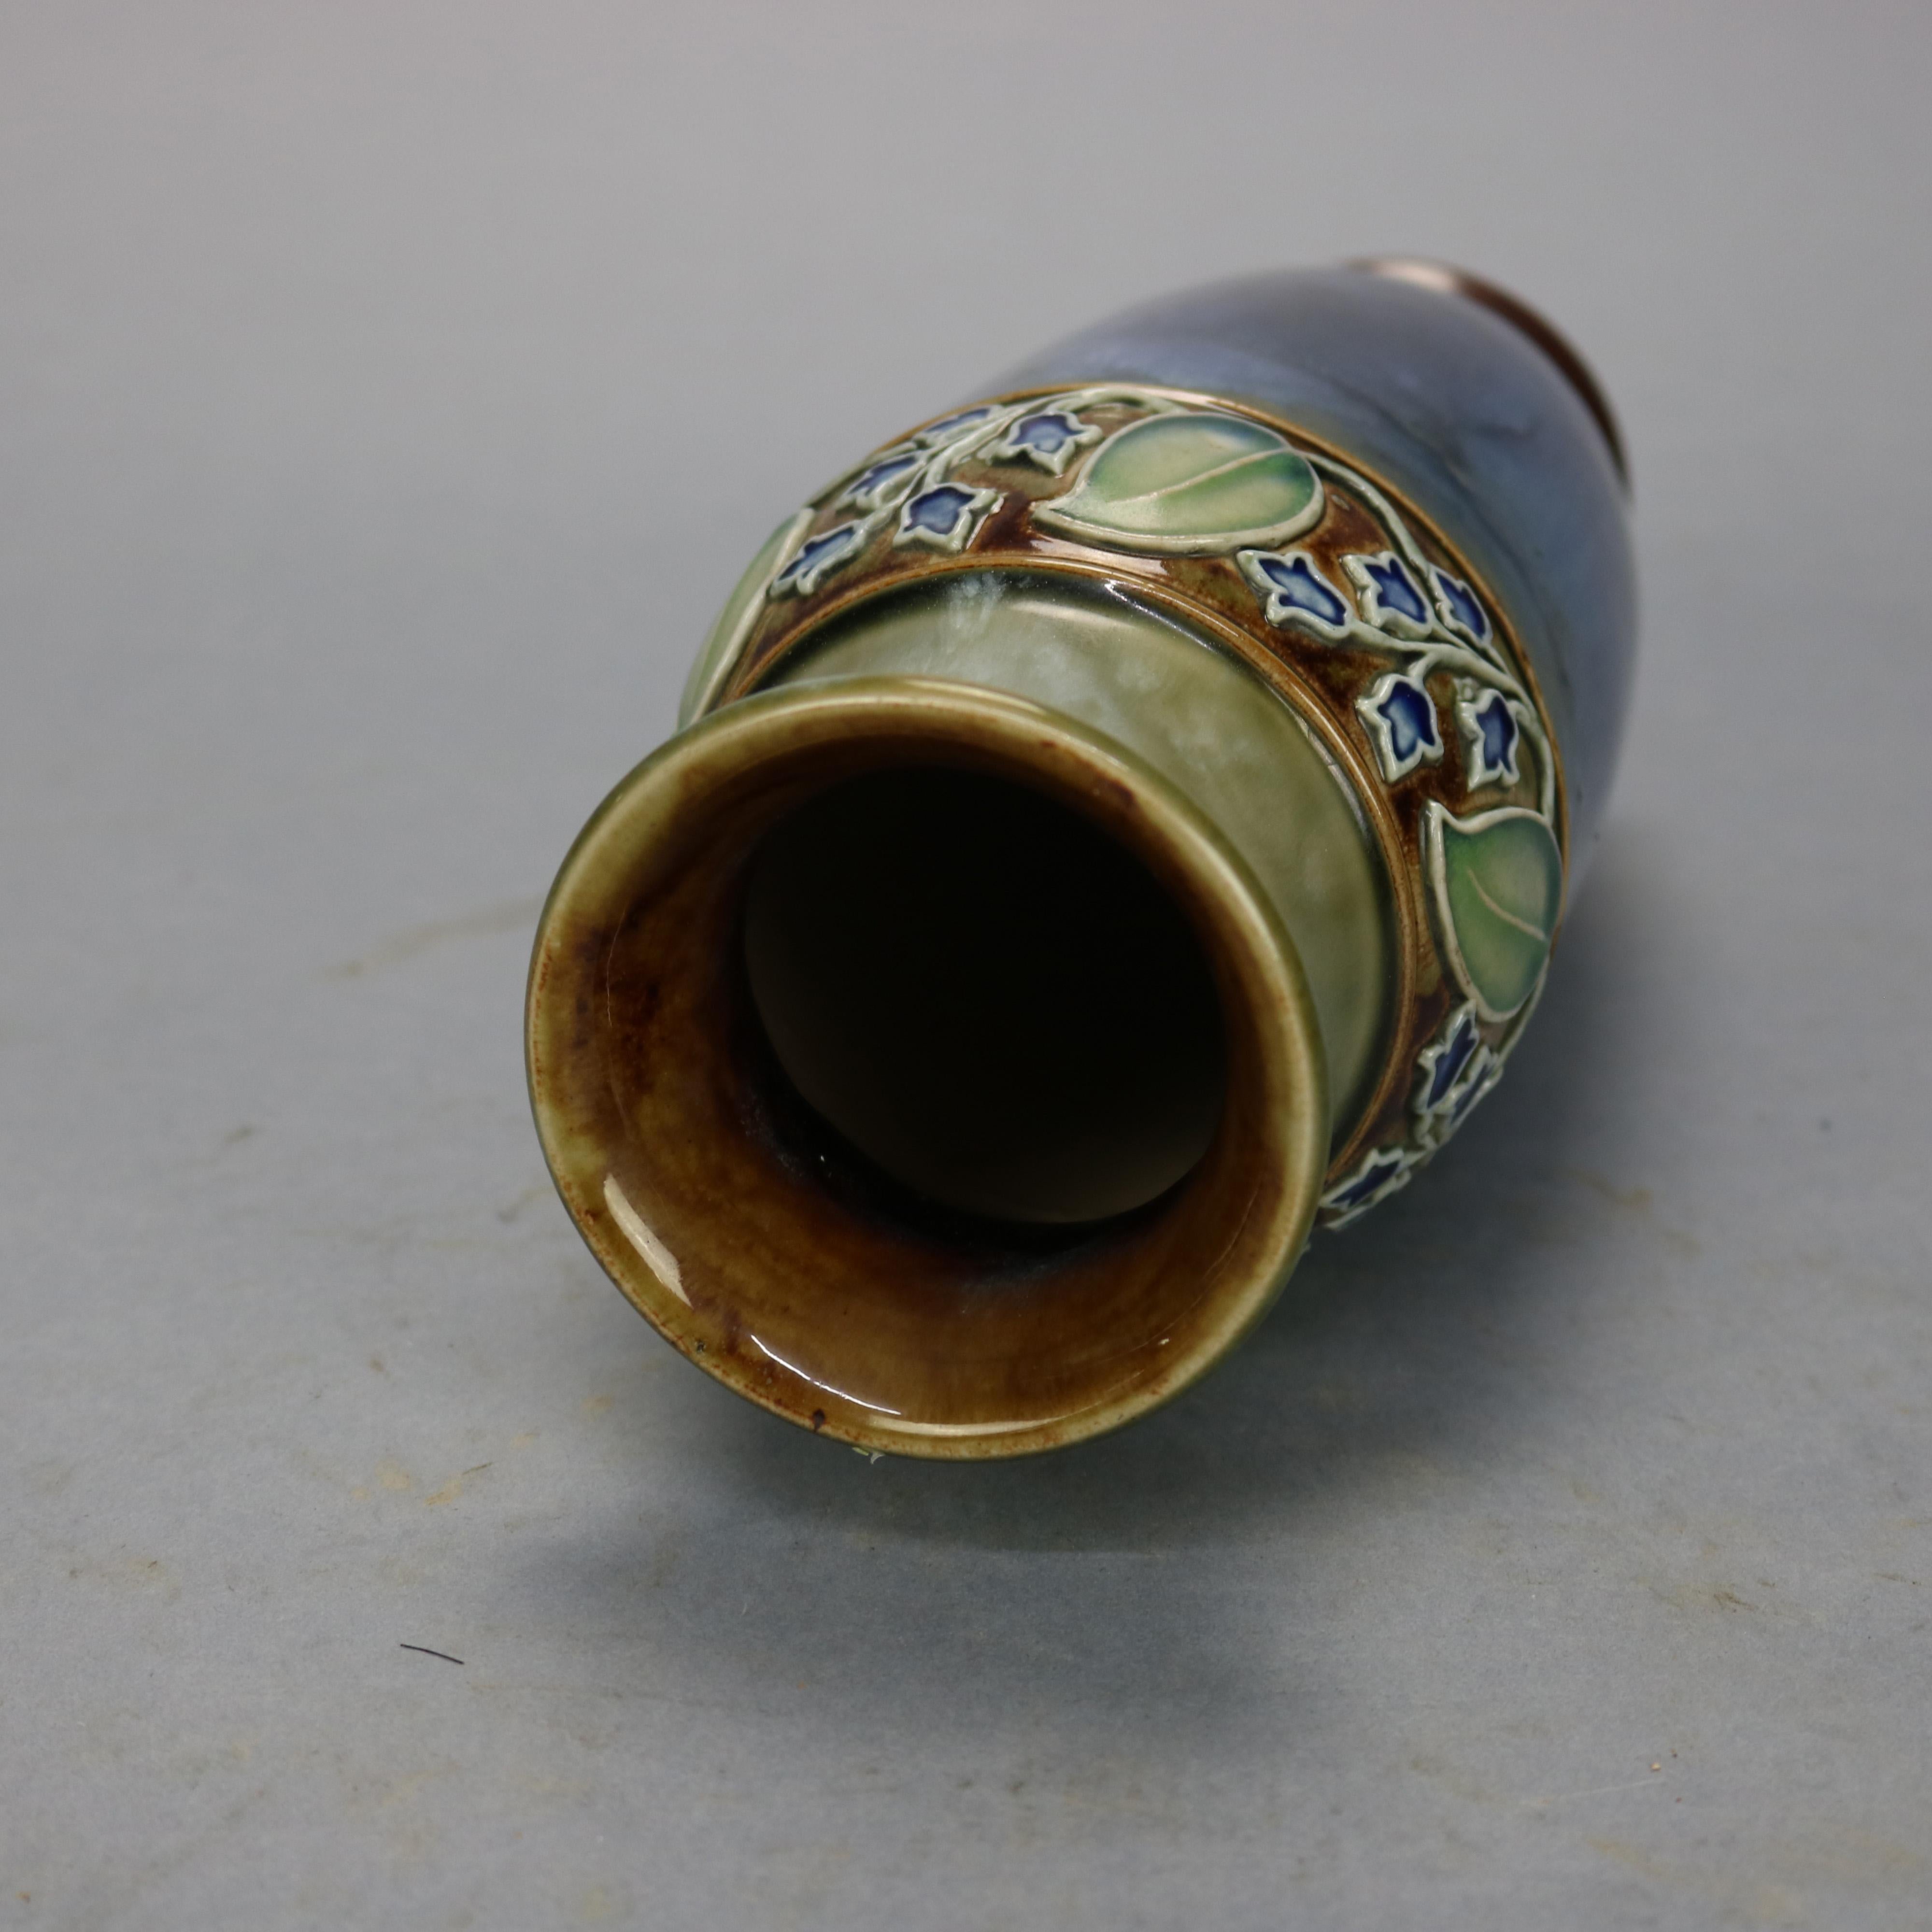 English Antique Pair of Royal Doulton Arts & Crafts Pottery Vases, Circa 1910